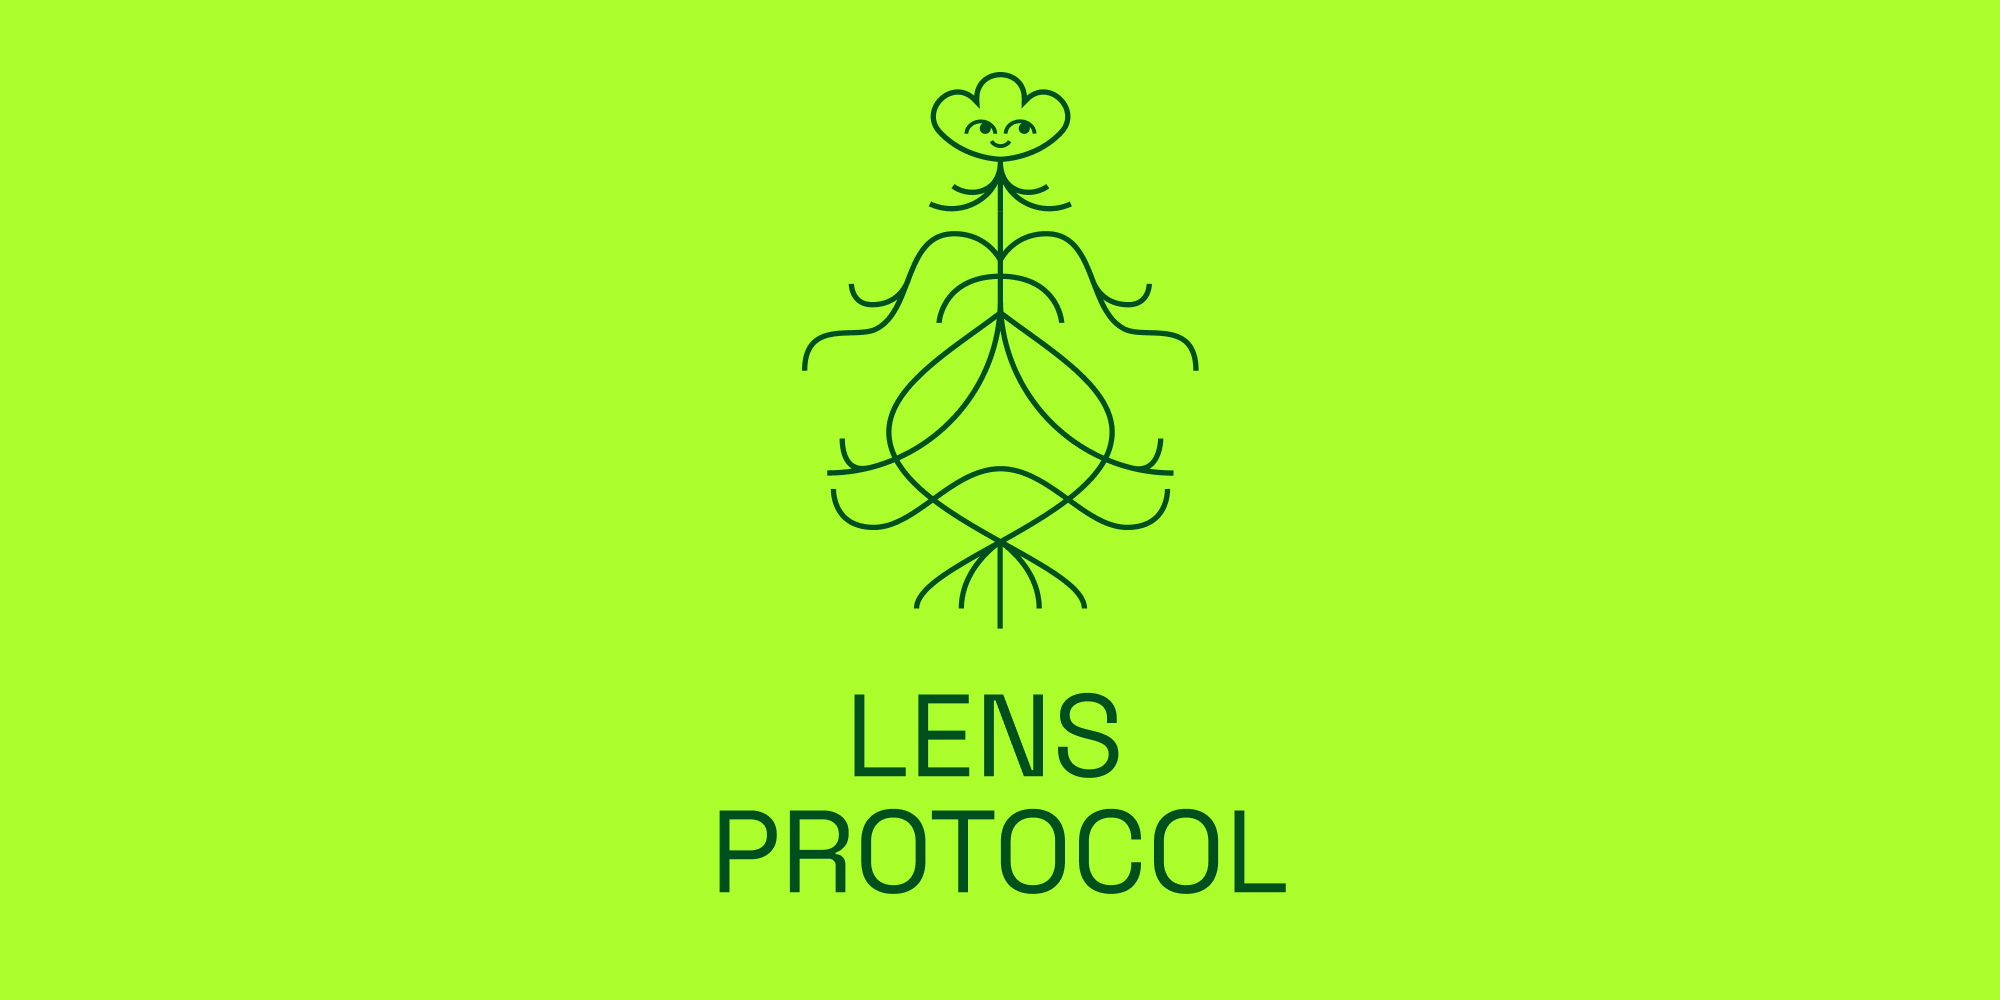 lens protokolü